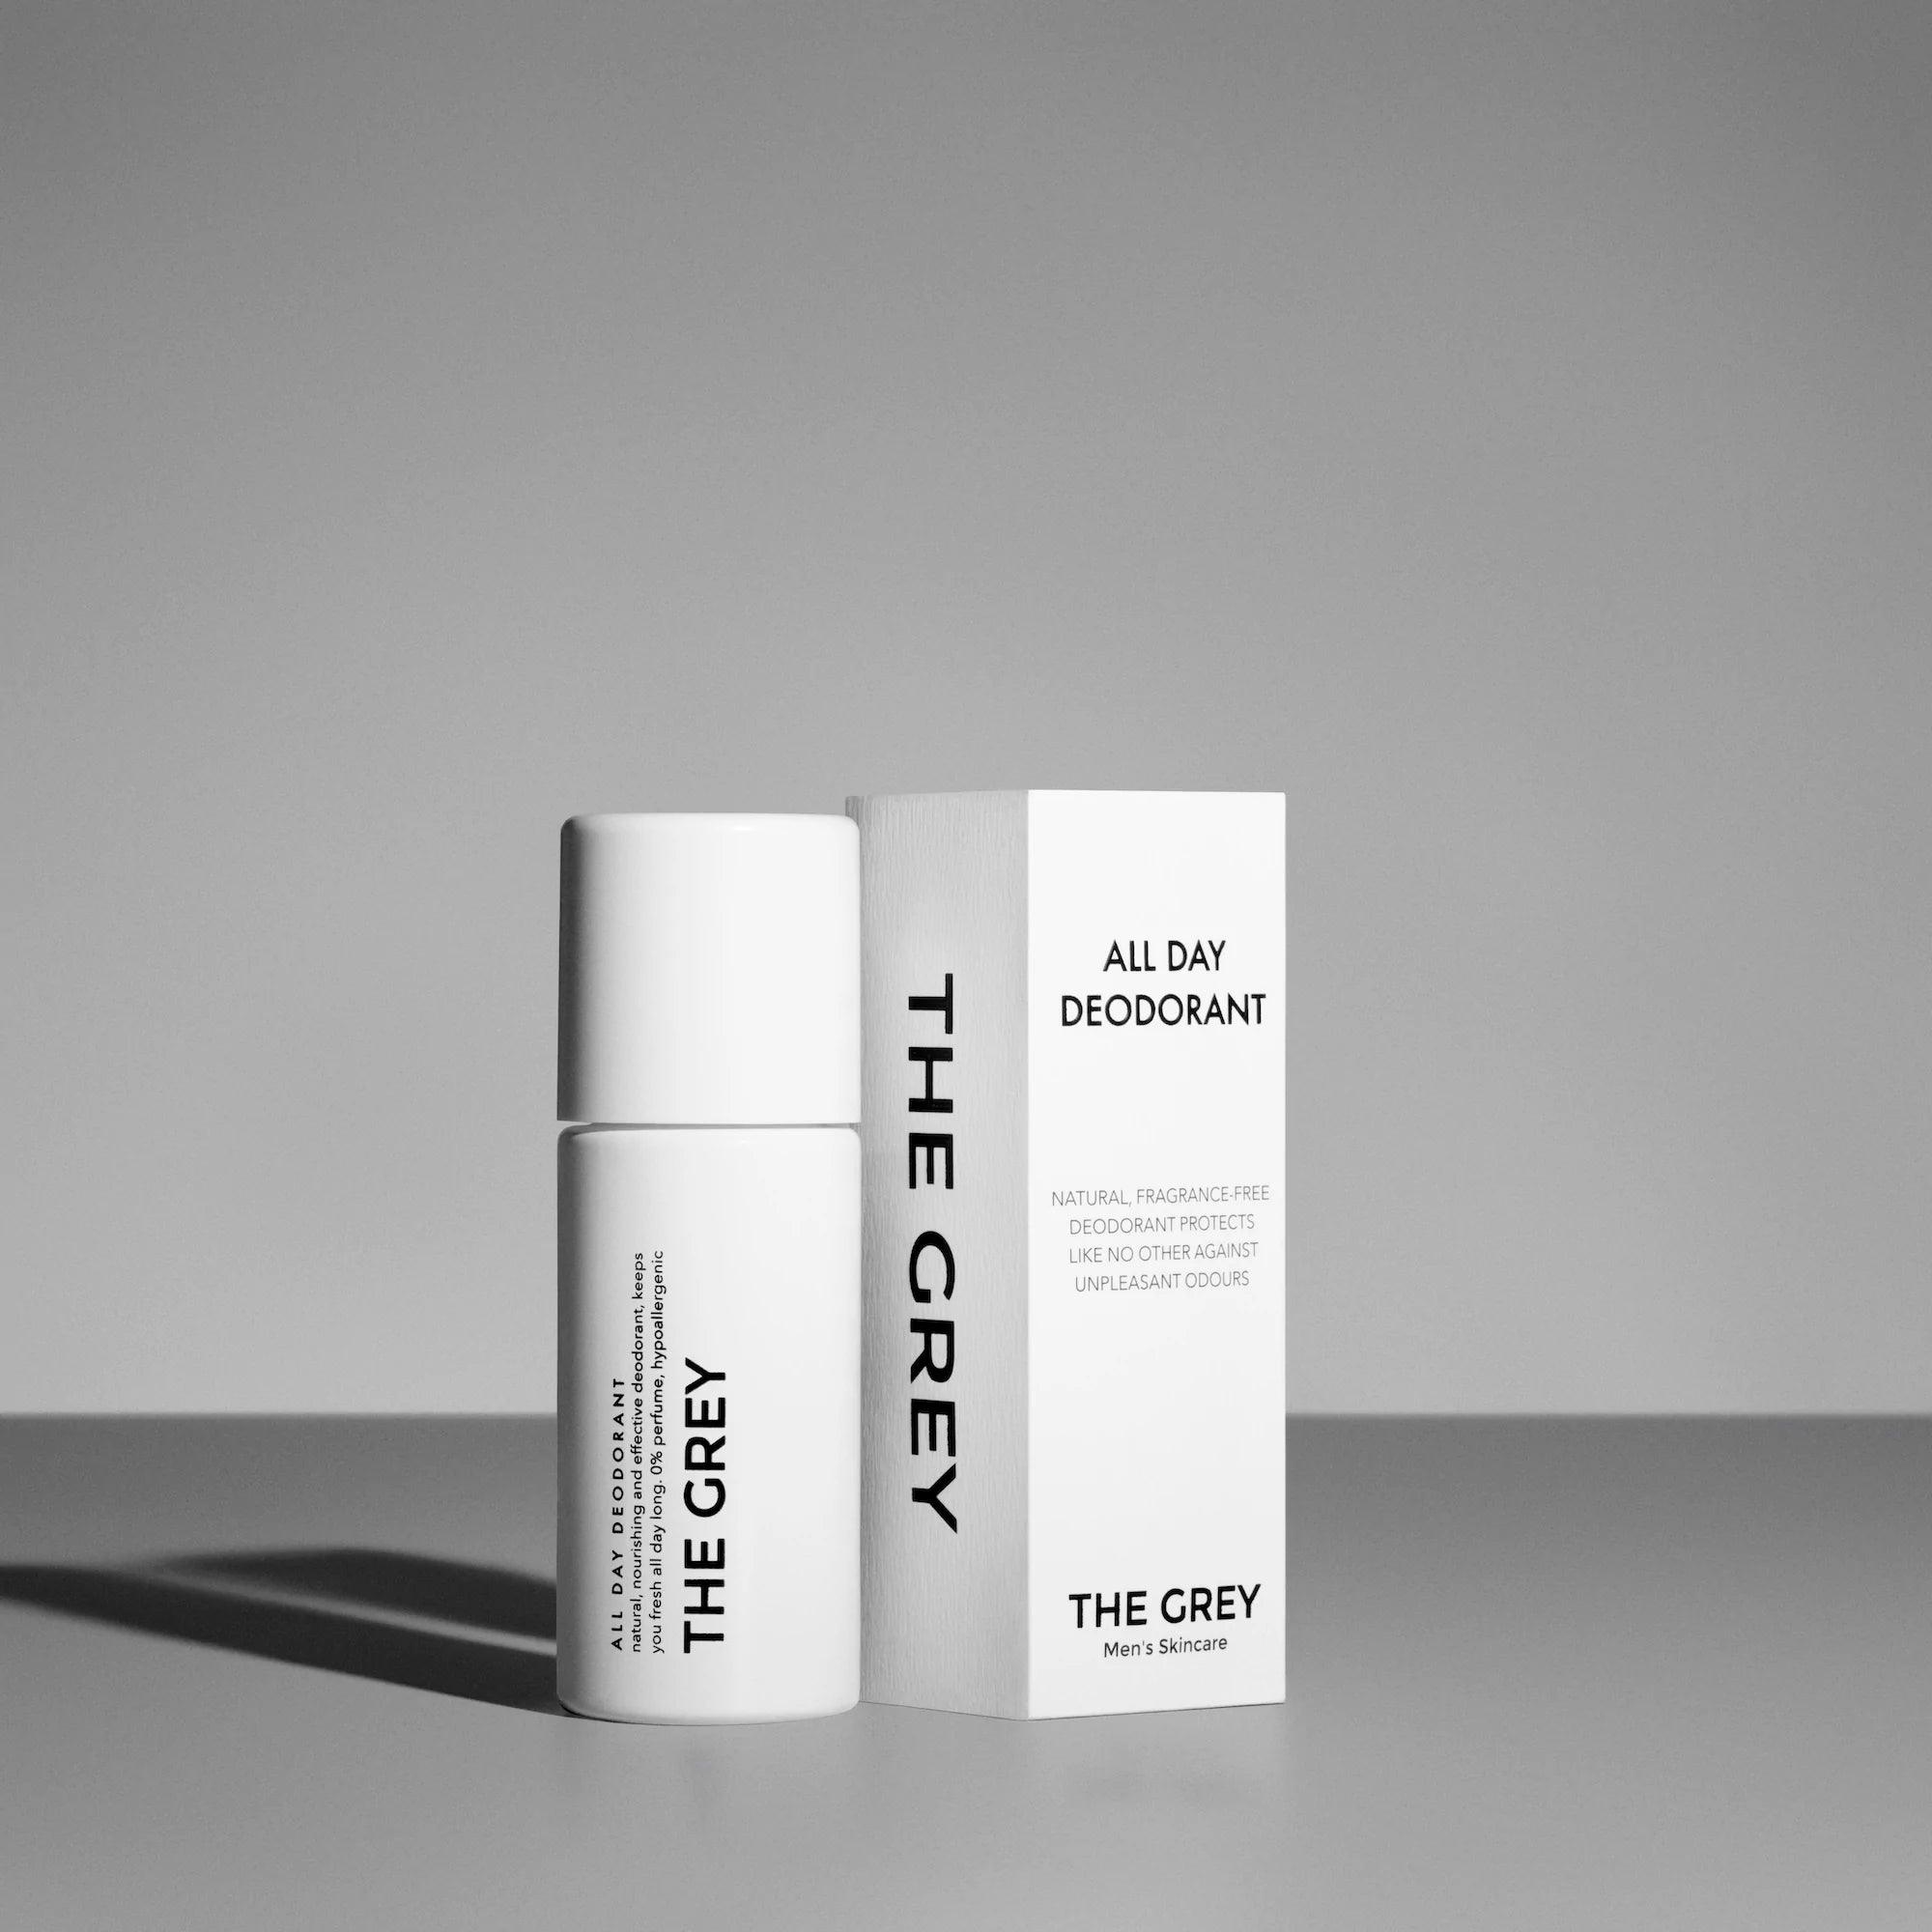 All Day Deodorant - The Grey Men's Skincare